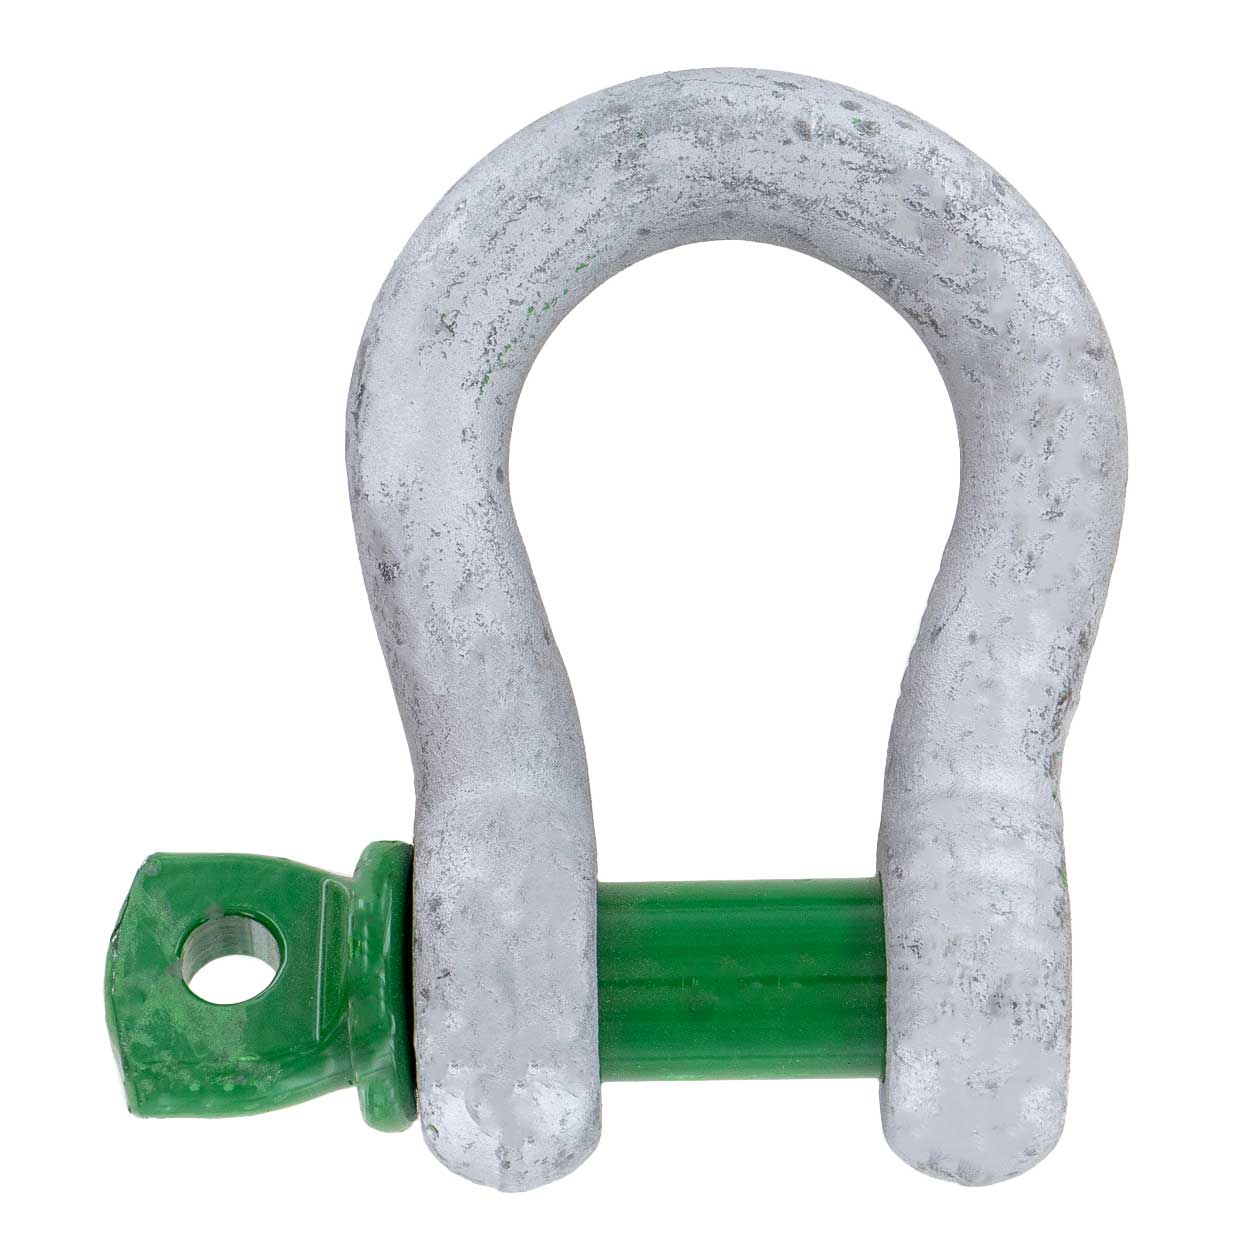 5/16" Van Beest Green Pin® Screw Pin Anchor Shackle | G-4161 - 0.75 Ton rear view